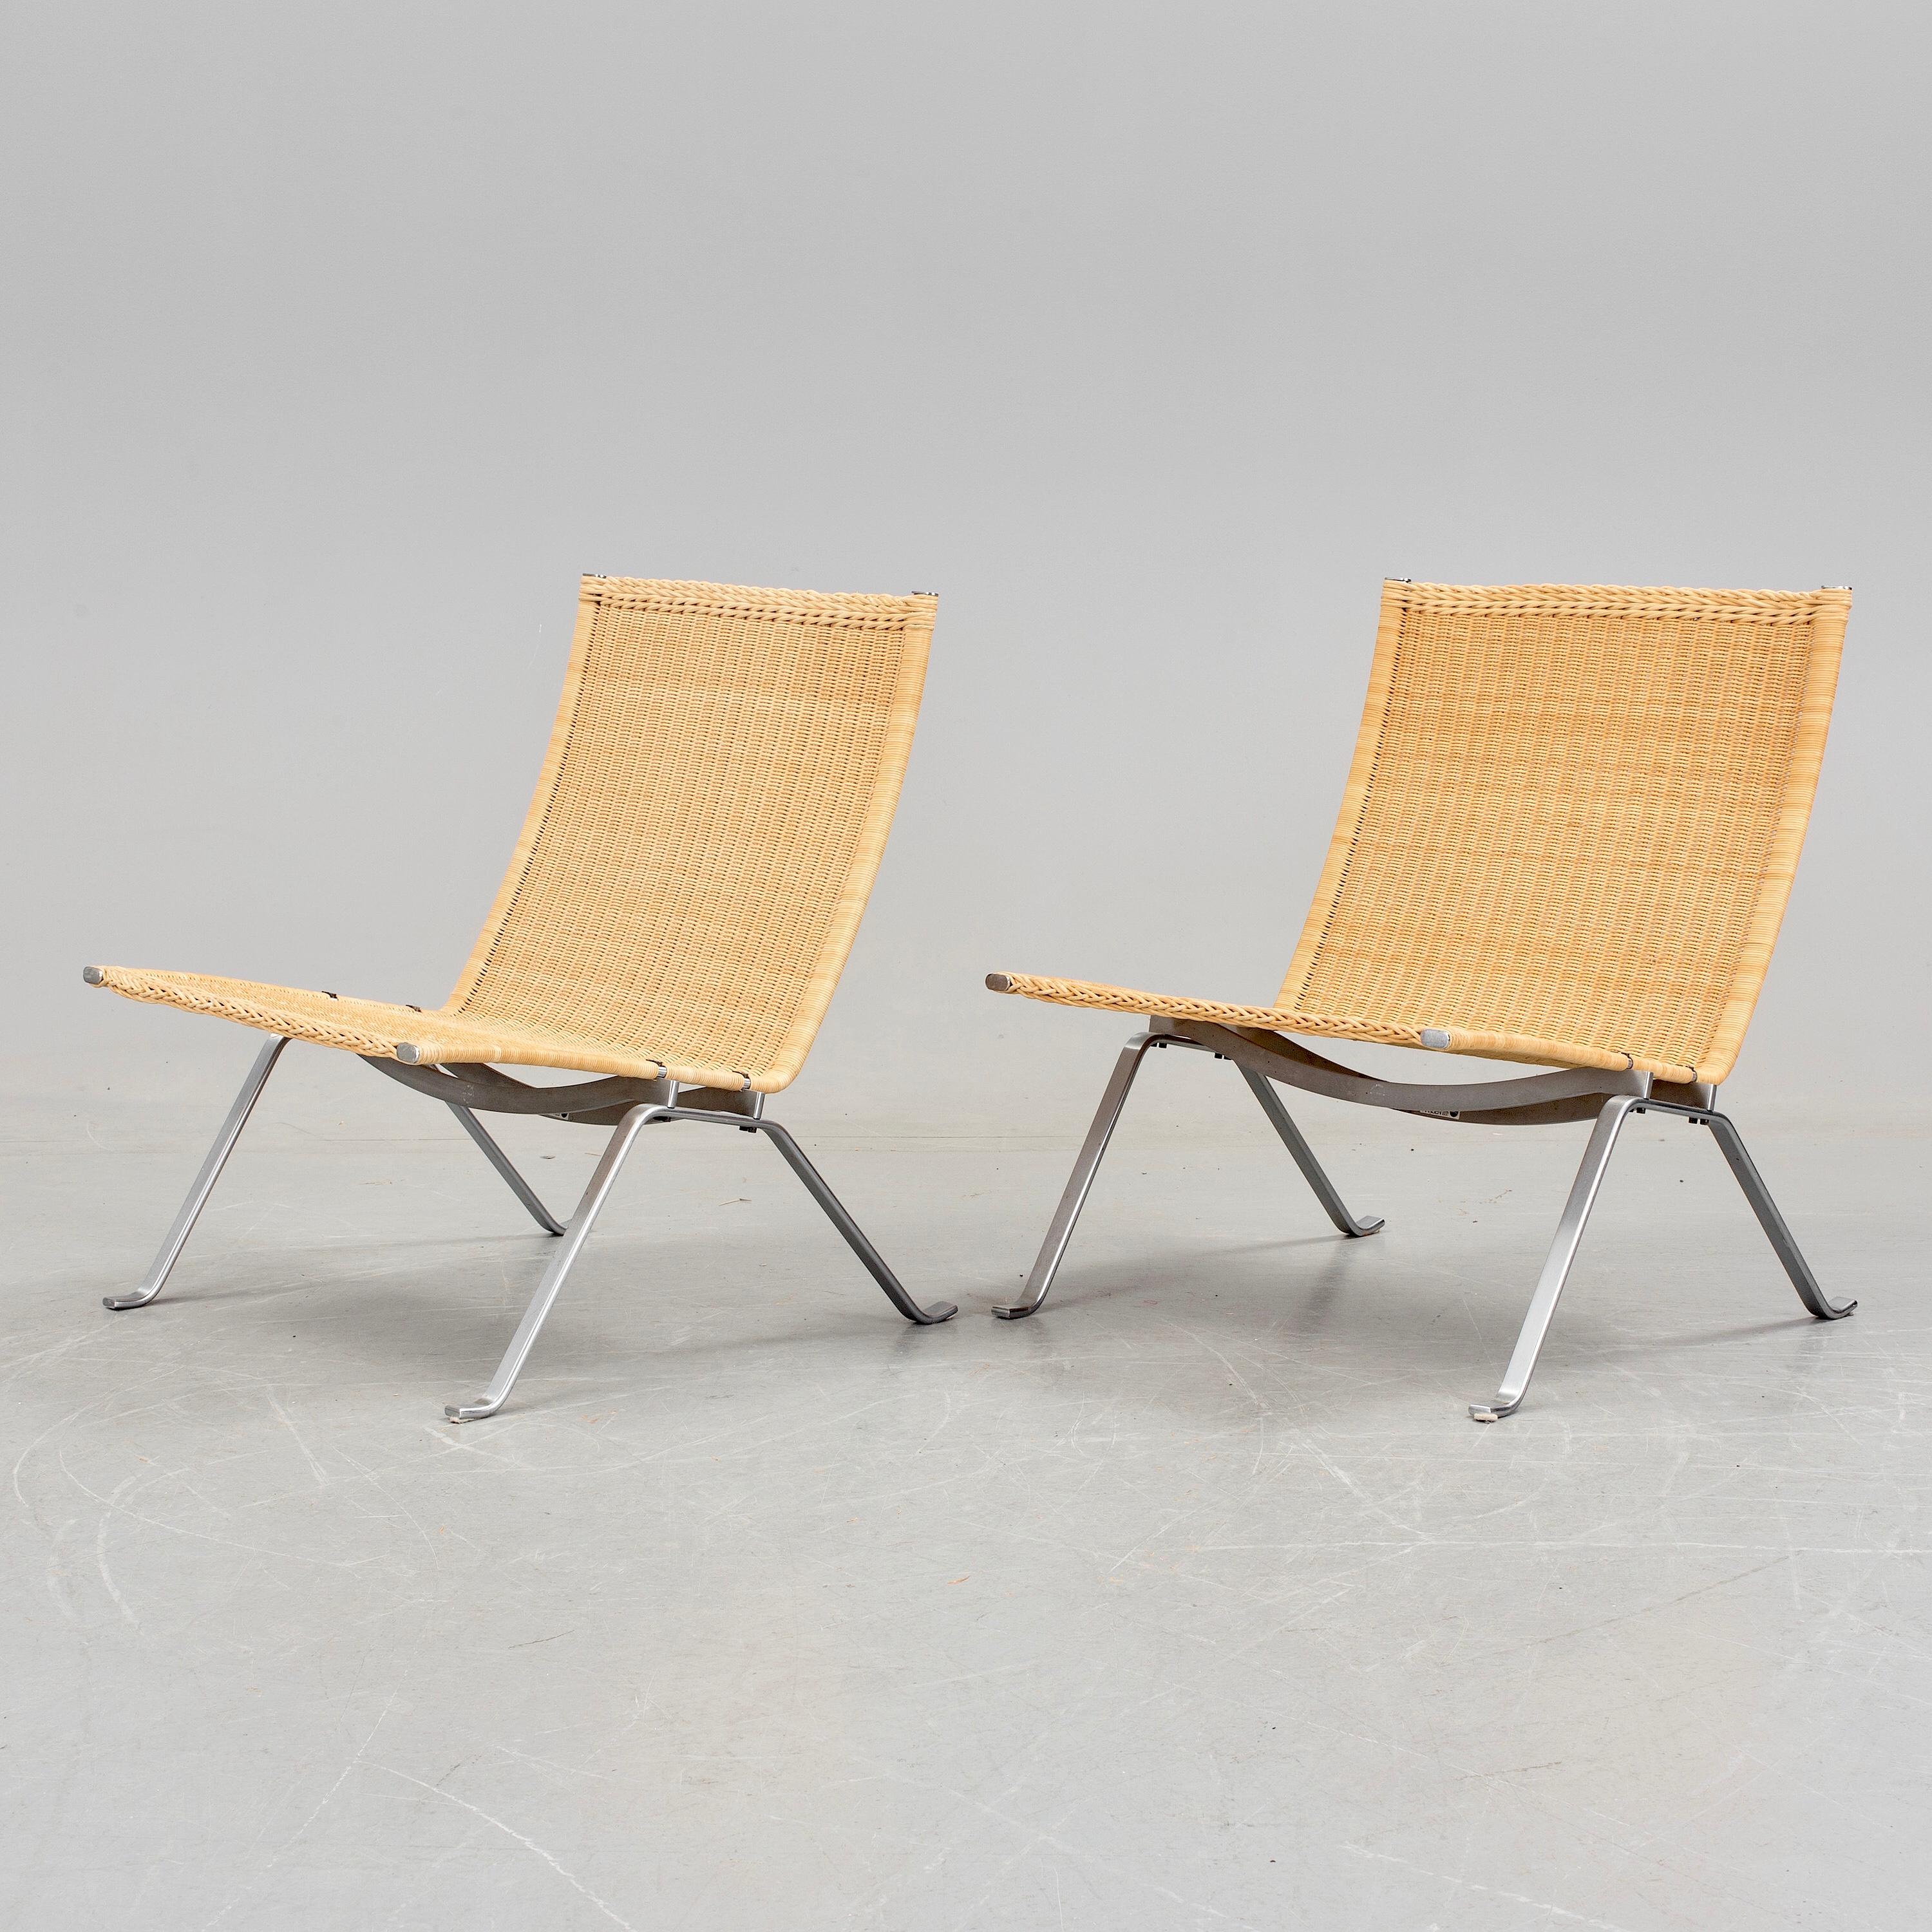 Pair of cane easy chairs model PK-22 designed by Poul Kjærholm for E. Kold Christensen and produced by Fritz Hansen in Denmark.